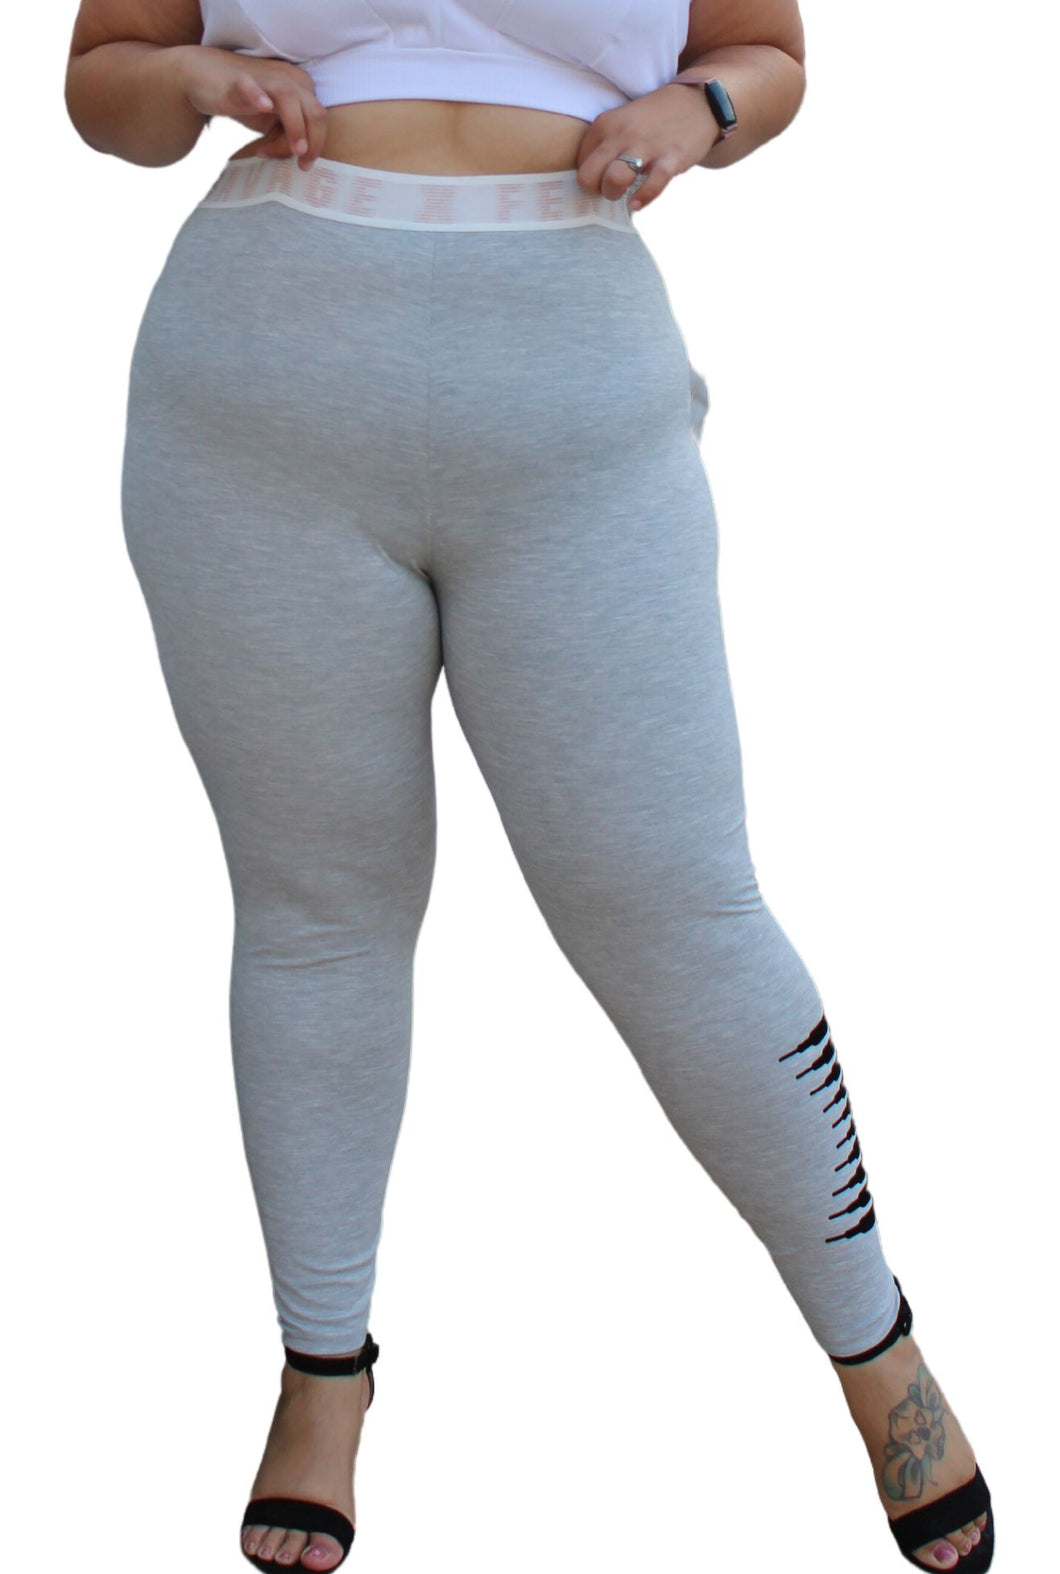 Savage Fenty Grey Logo leggings, Size 3X